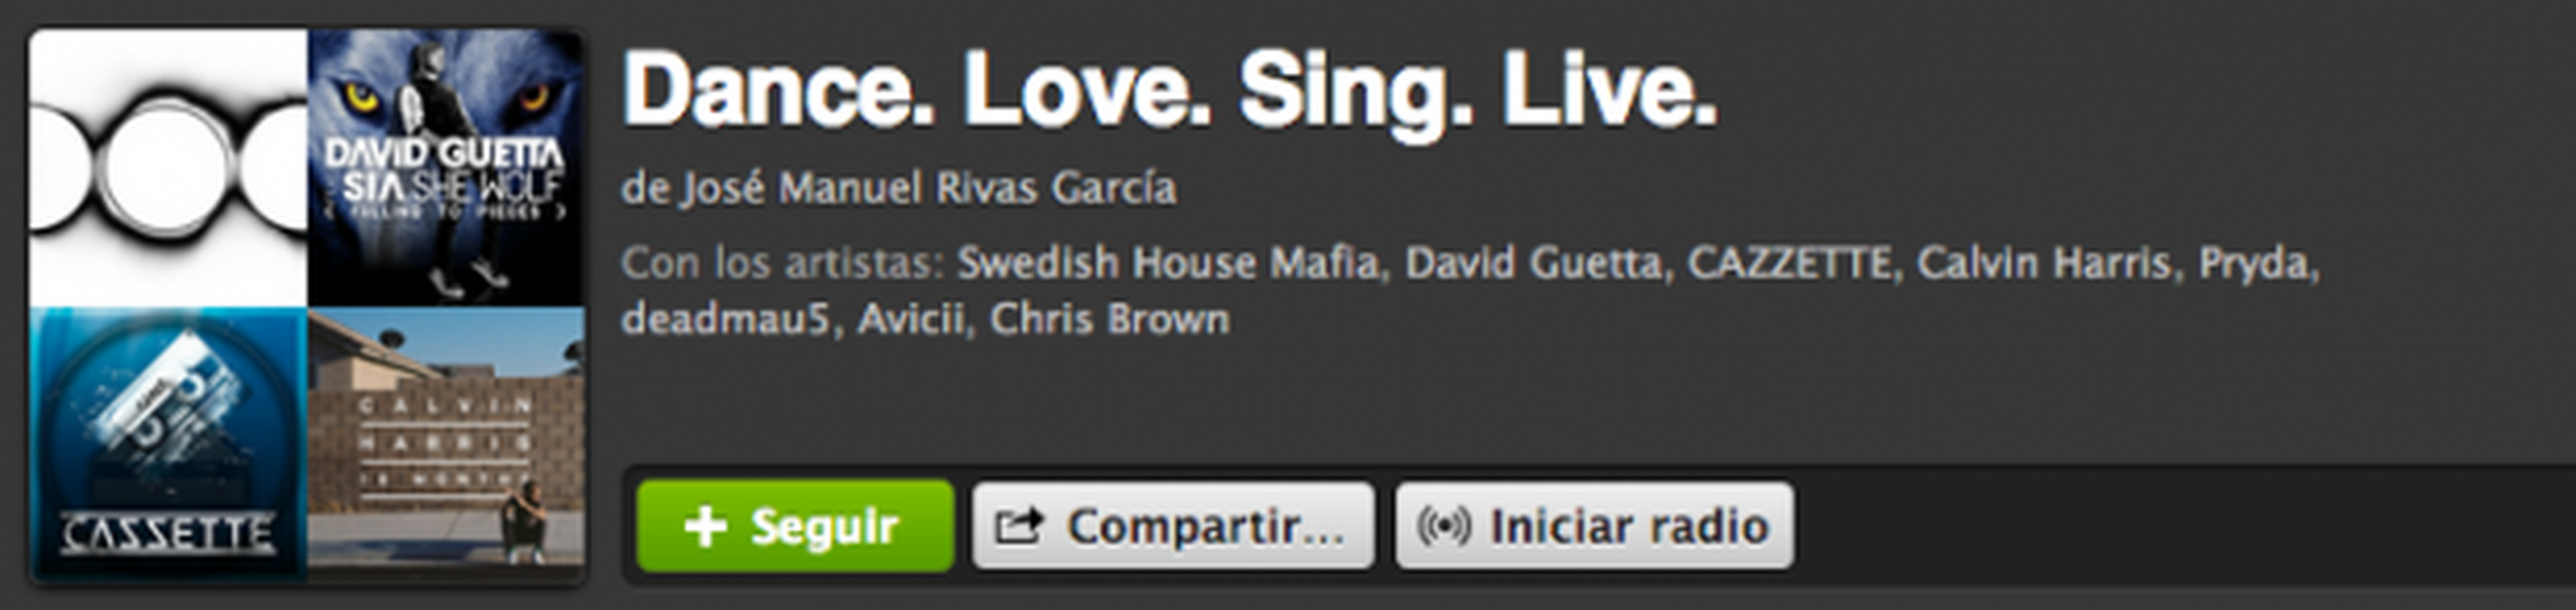 Lista de reproducción de Spotify para gimnasio Dance.Love.Sing.Live